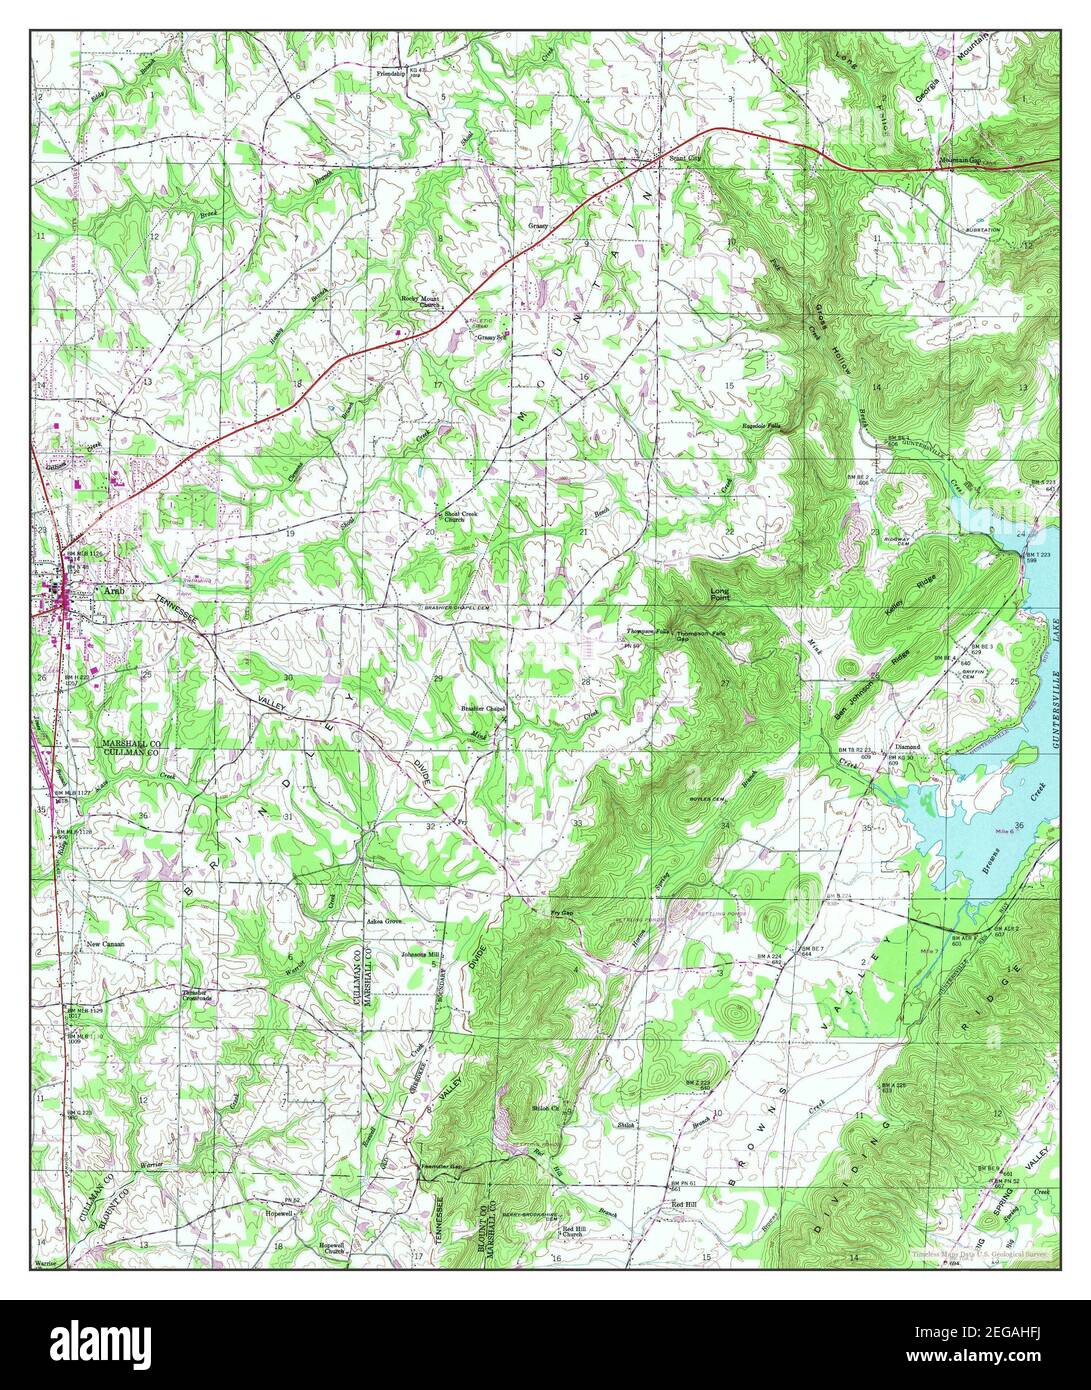 Arab, Alabama, map 1948, 1:24000, United States of America by Timeless Maps, data U.S. Geological Survey Stock Photo